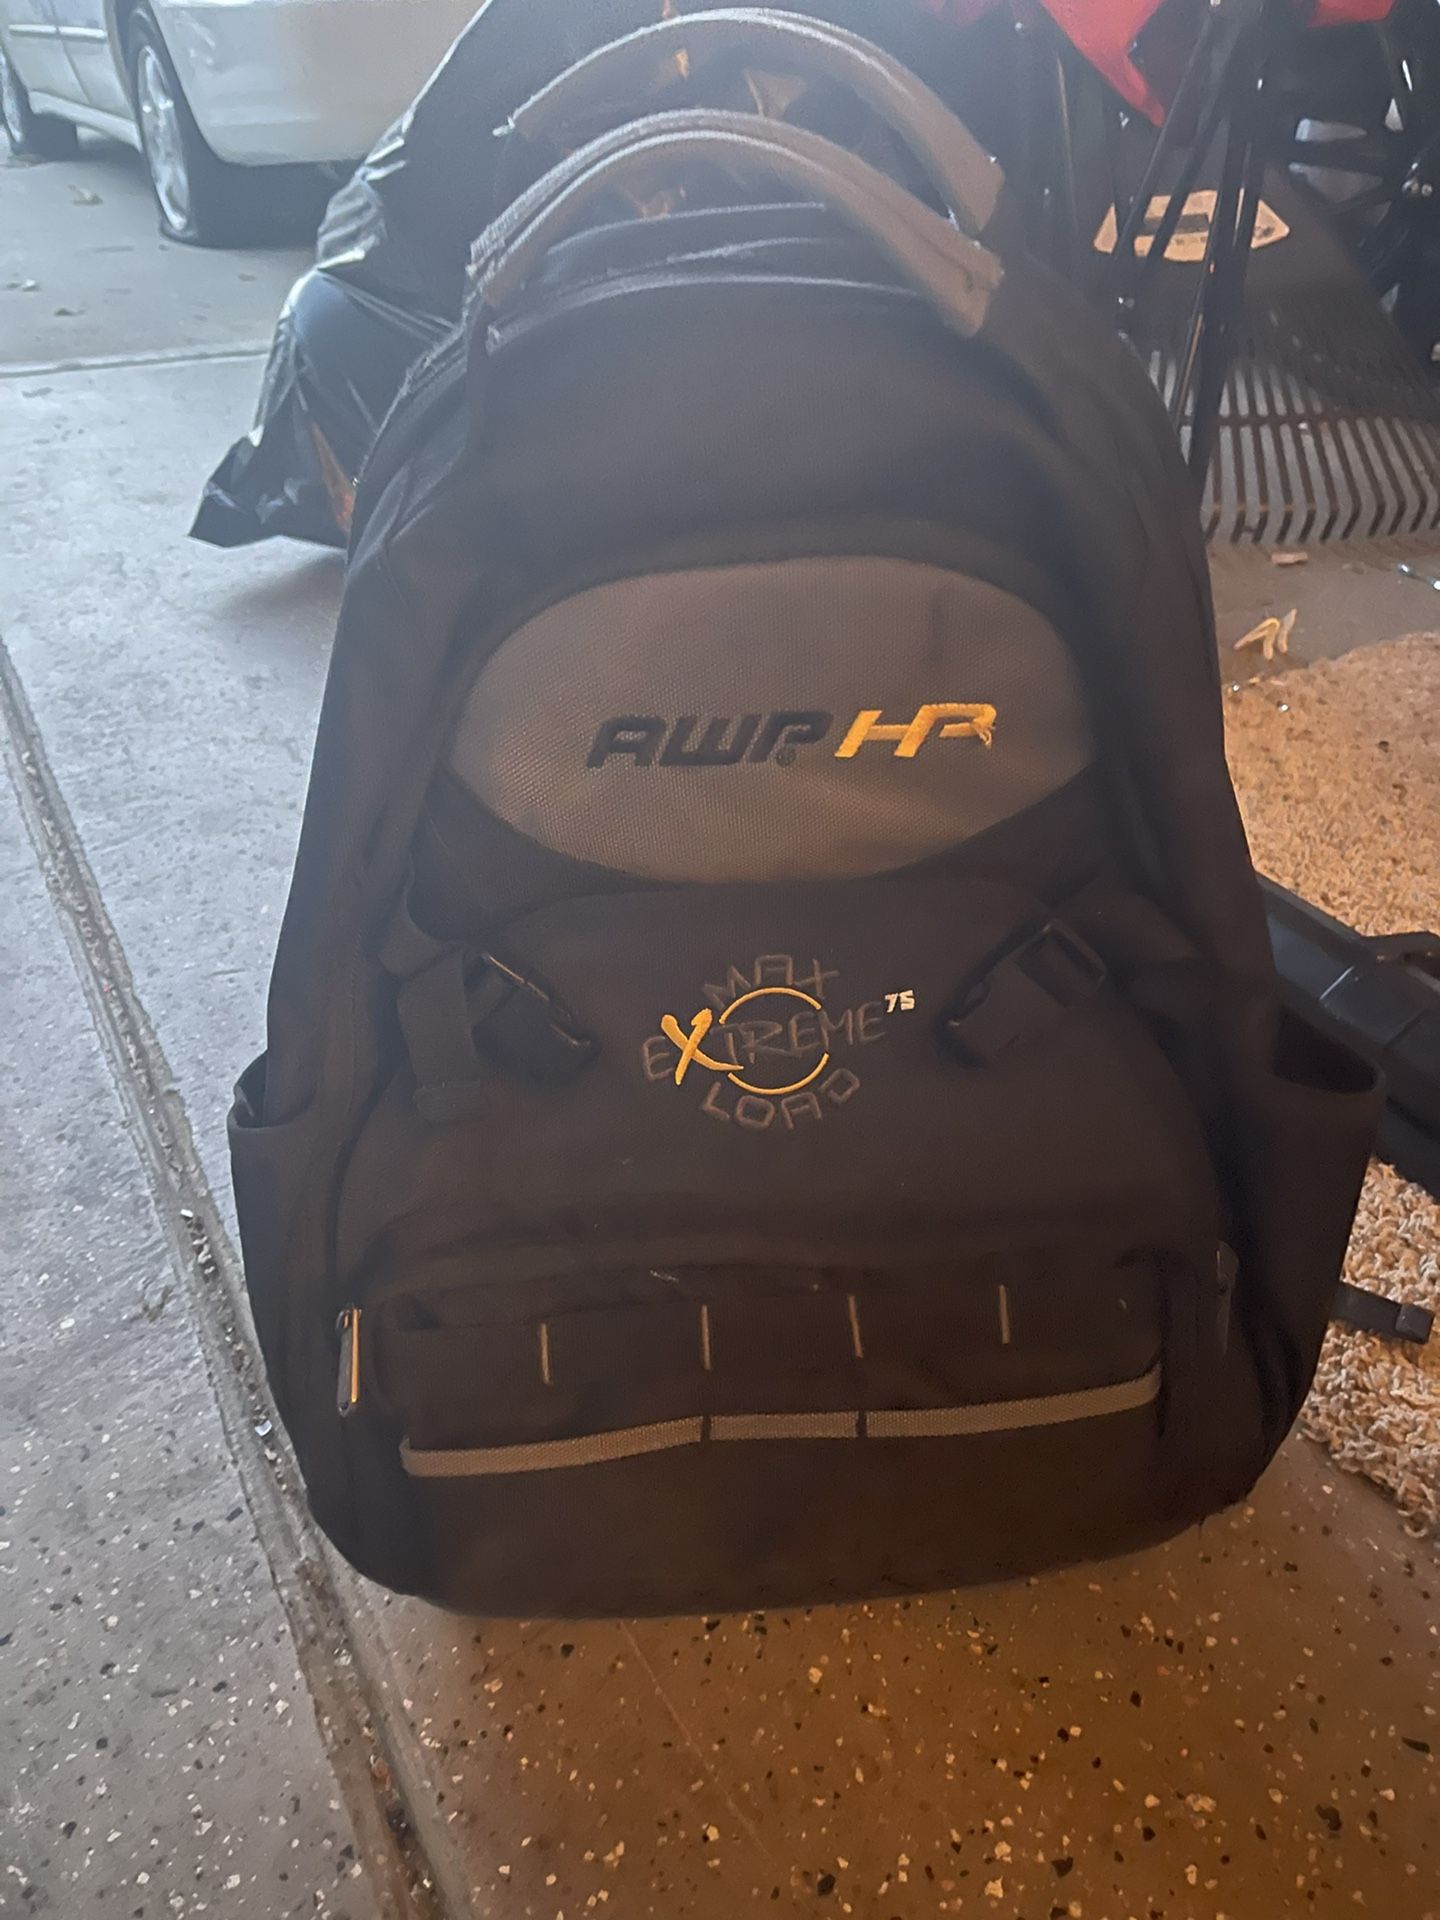 Awphp Heavy Duty Backpack